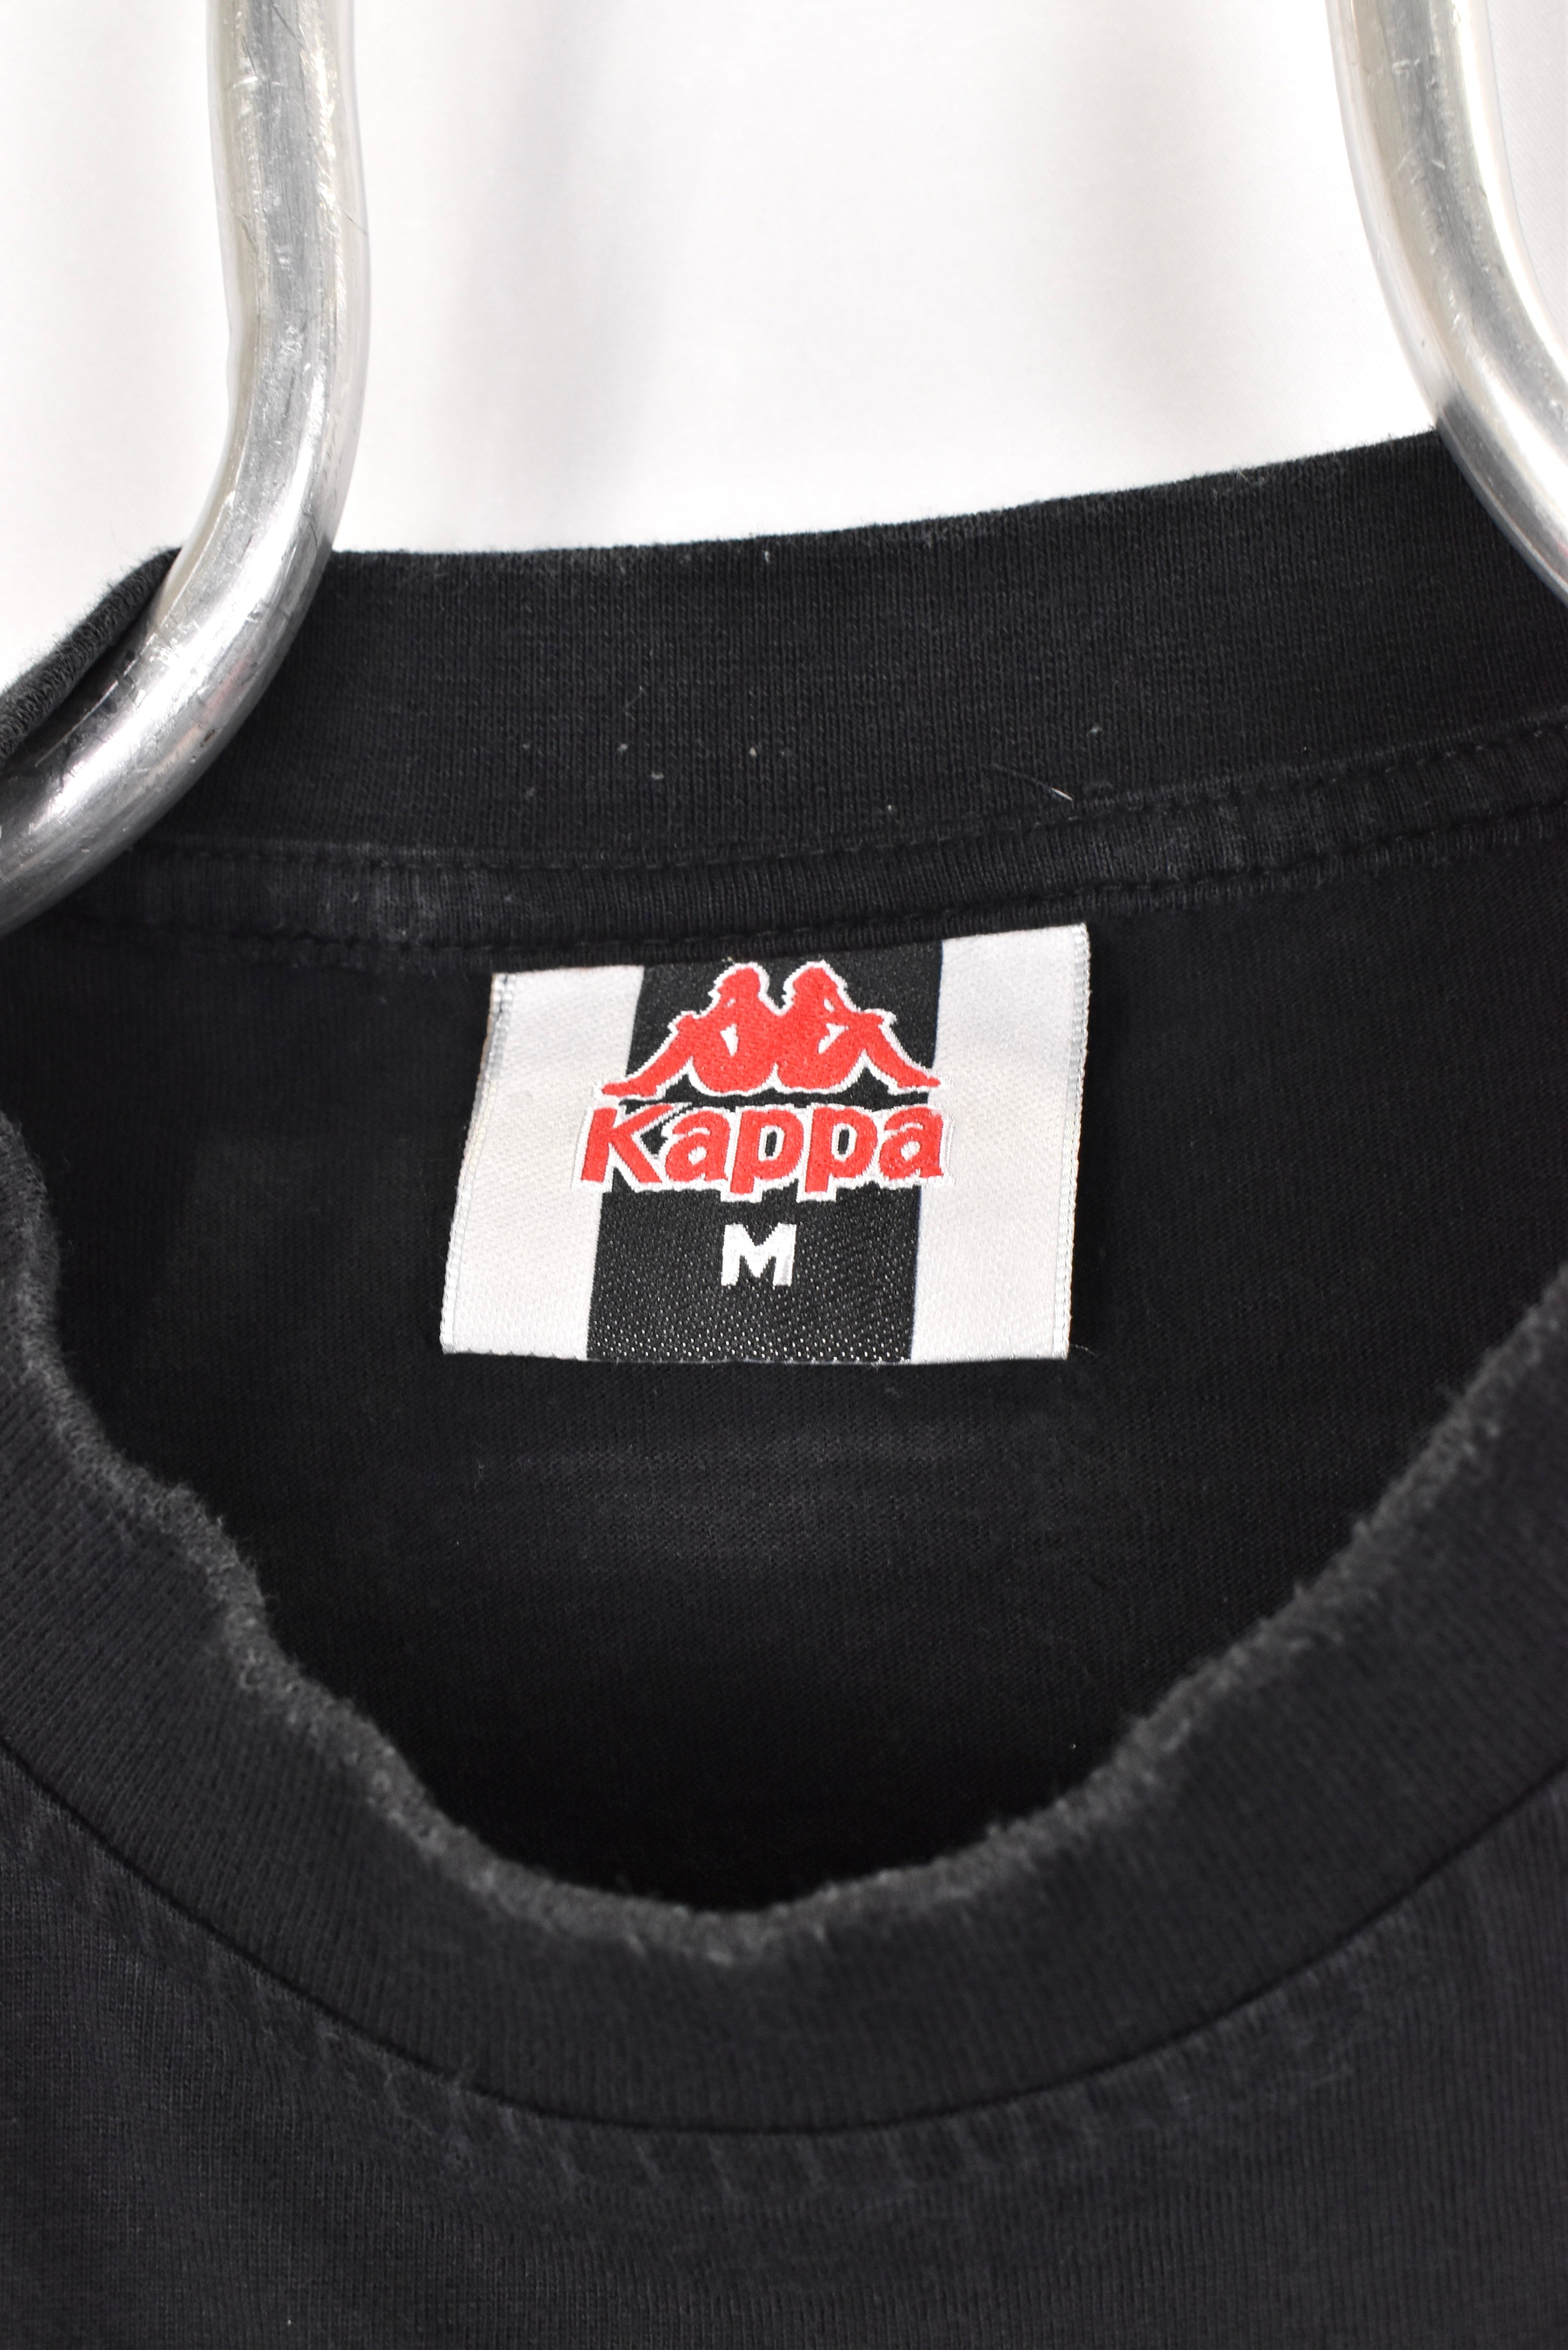 Vintage Kappa shirt, black graphic tee - AU Small KAPPA